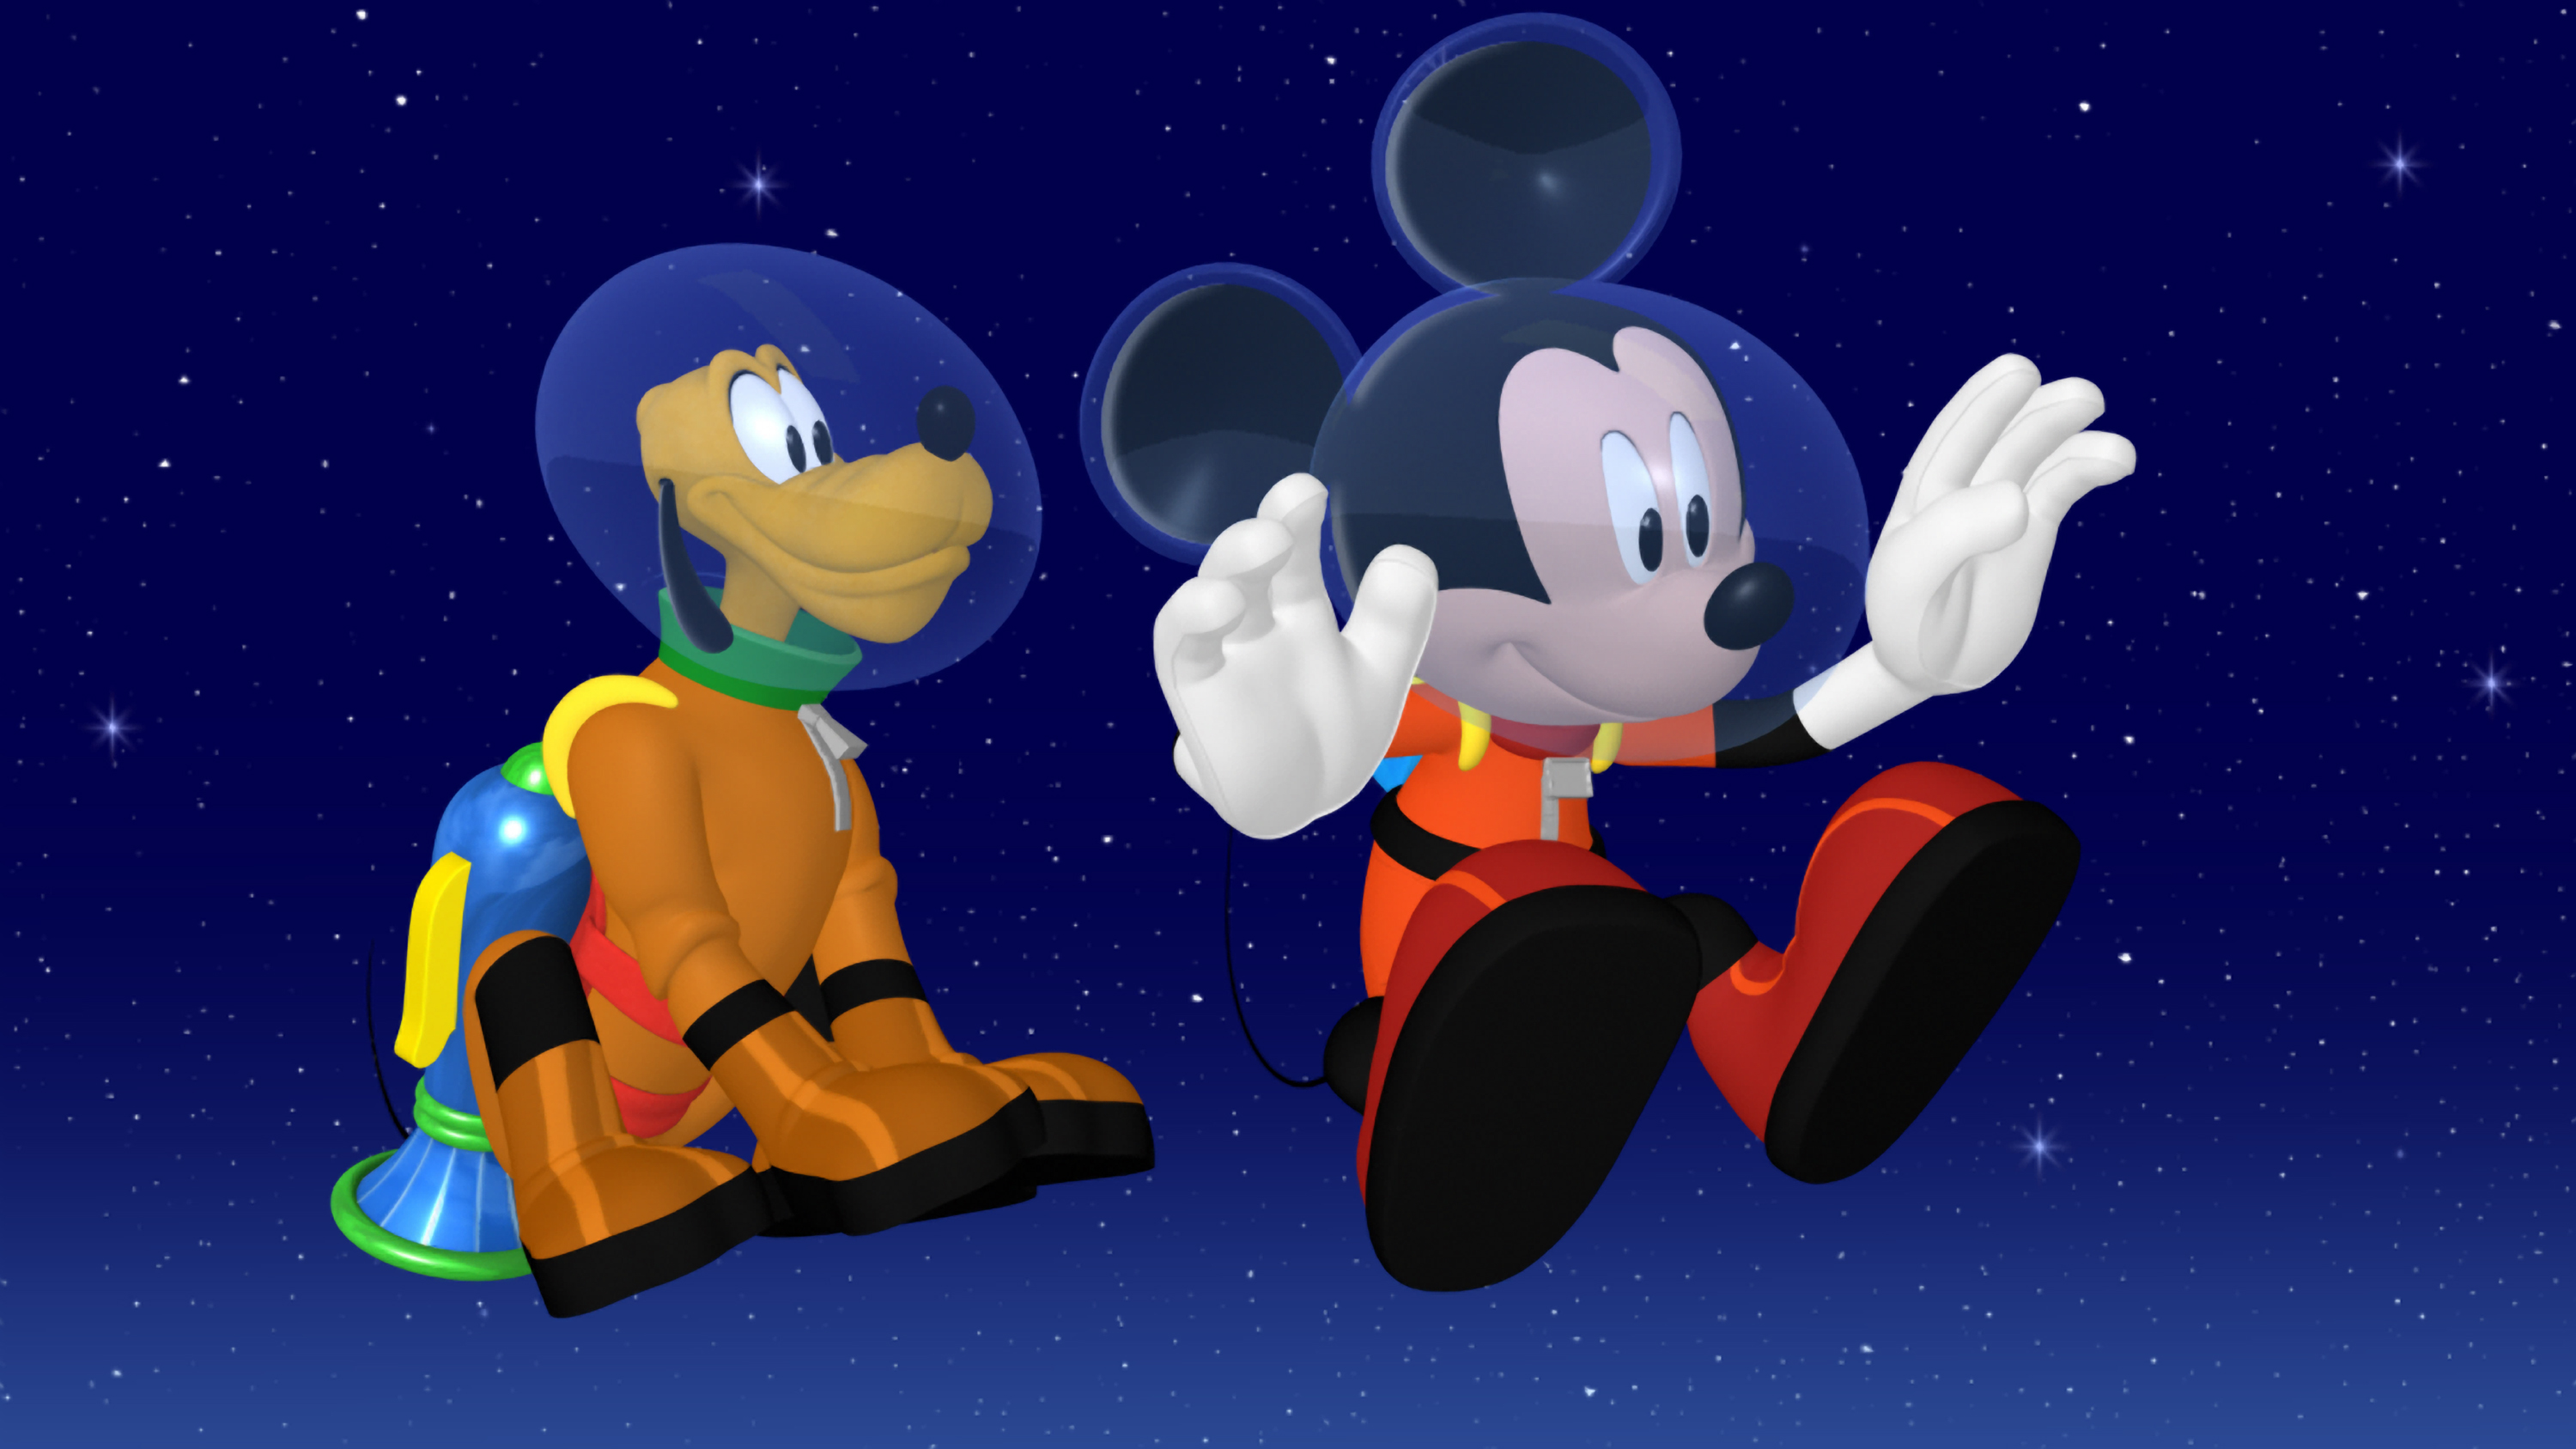 Mickey s adventures. Mickey Mouse Clubhouse Space Adventure. Клуб Микки Мауса космические приключения часть 1. Клуб Микки Мауса Space Adventure. Микки Маус в космосе.